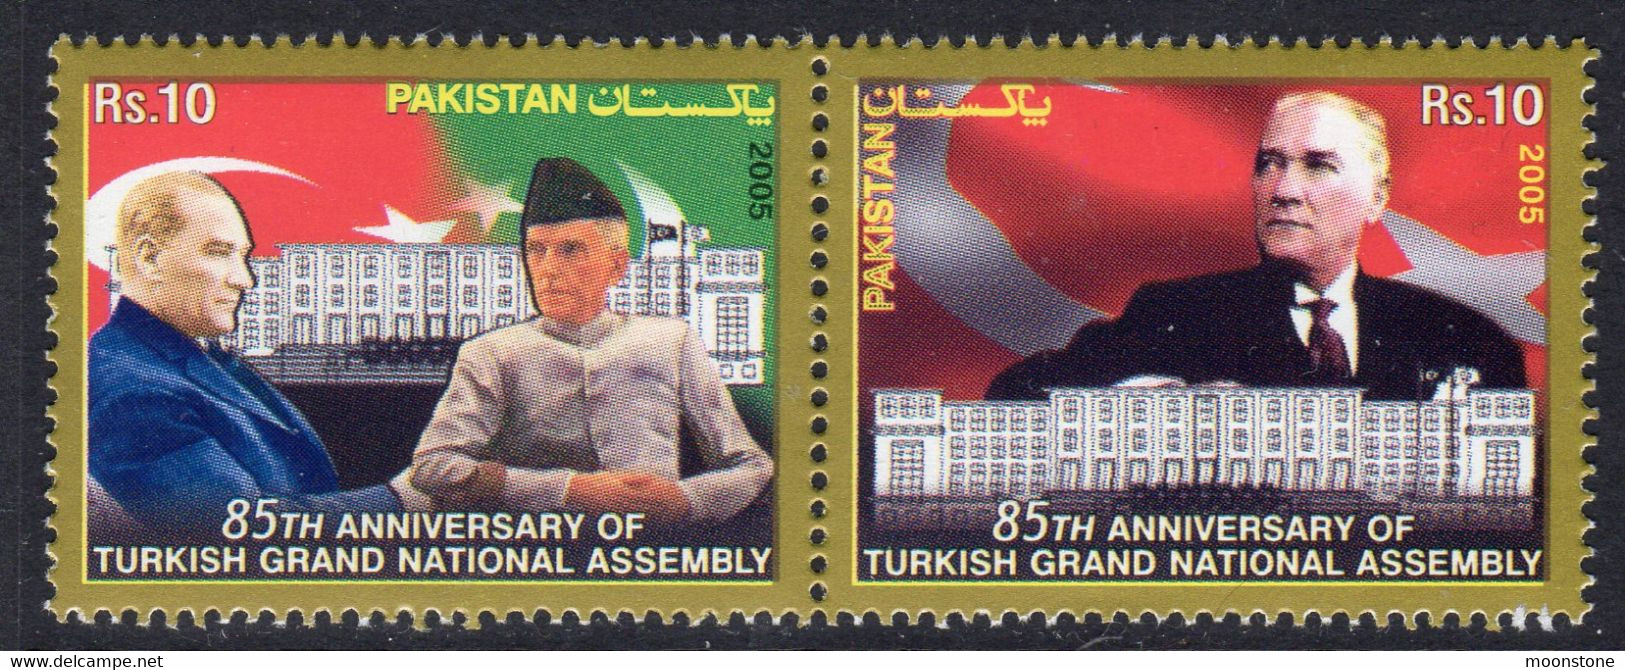 Pakistan 2005 85th Anniversary Of Turkish Grand National Assembly Pair, MNH, SG 1286/7 (E) - Pakistan